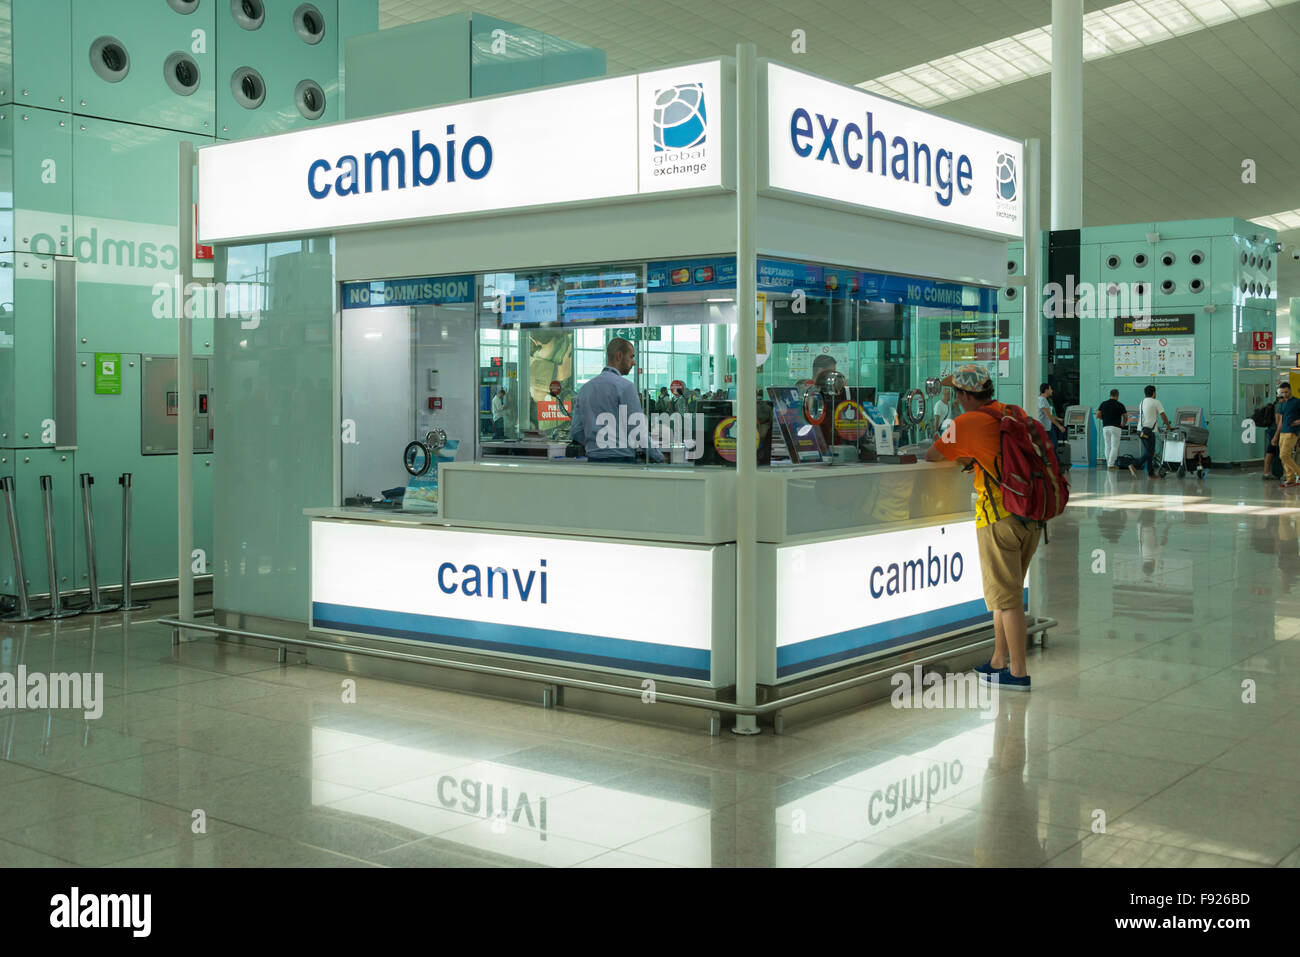 Service de change (Cambio) stand à l'intérieur de l'aéroport El Prat de Barcelone, El Prat de Llobregat, comté de Baix Llobregat, Catalogne, Espagne Banque D'Images